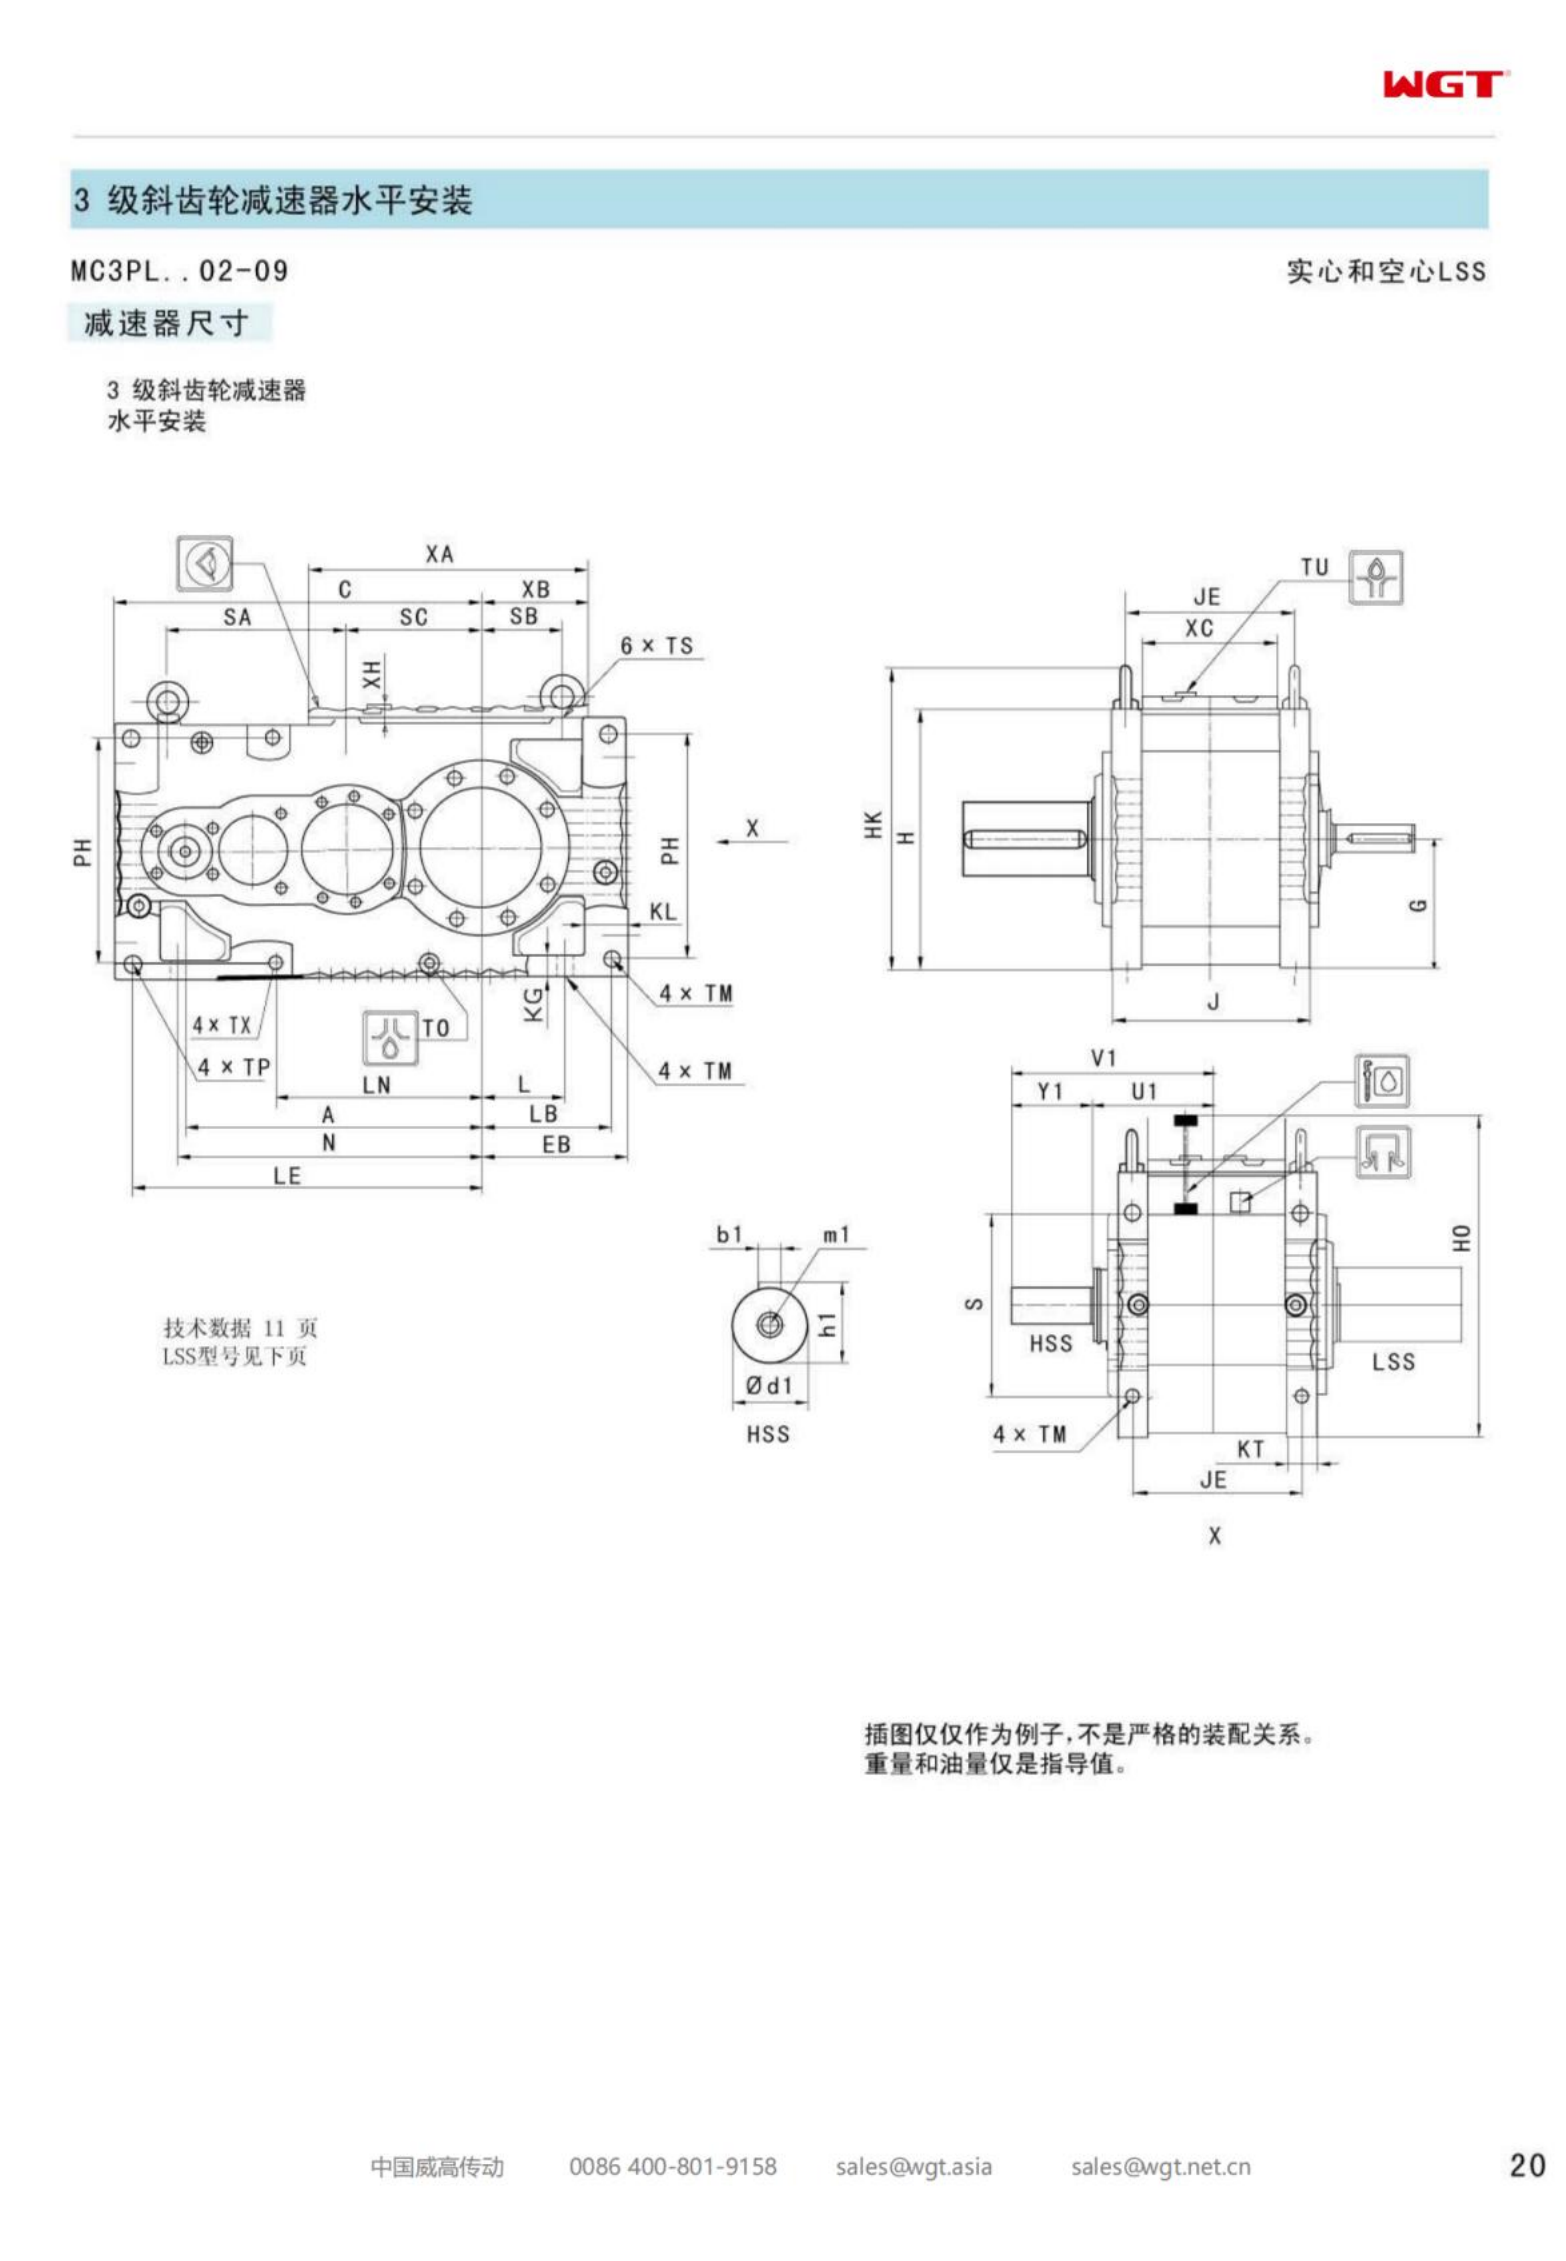 MC3PLHF05 replaces _SEW_MC_Series gearbox (patent)